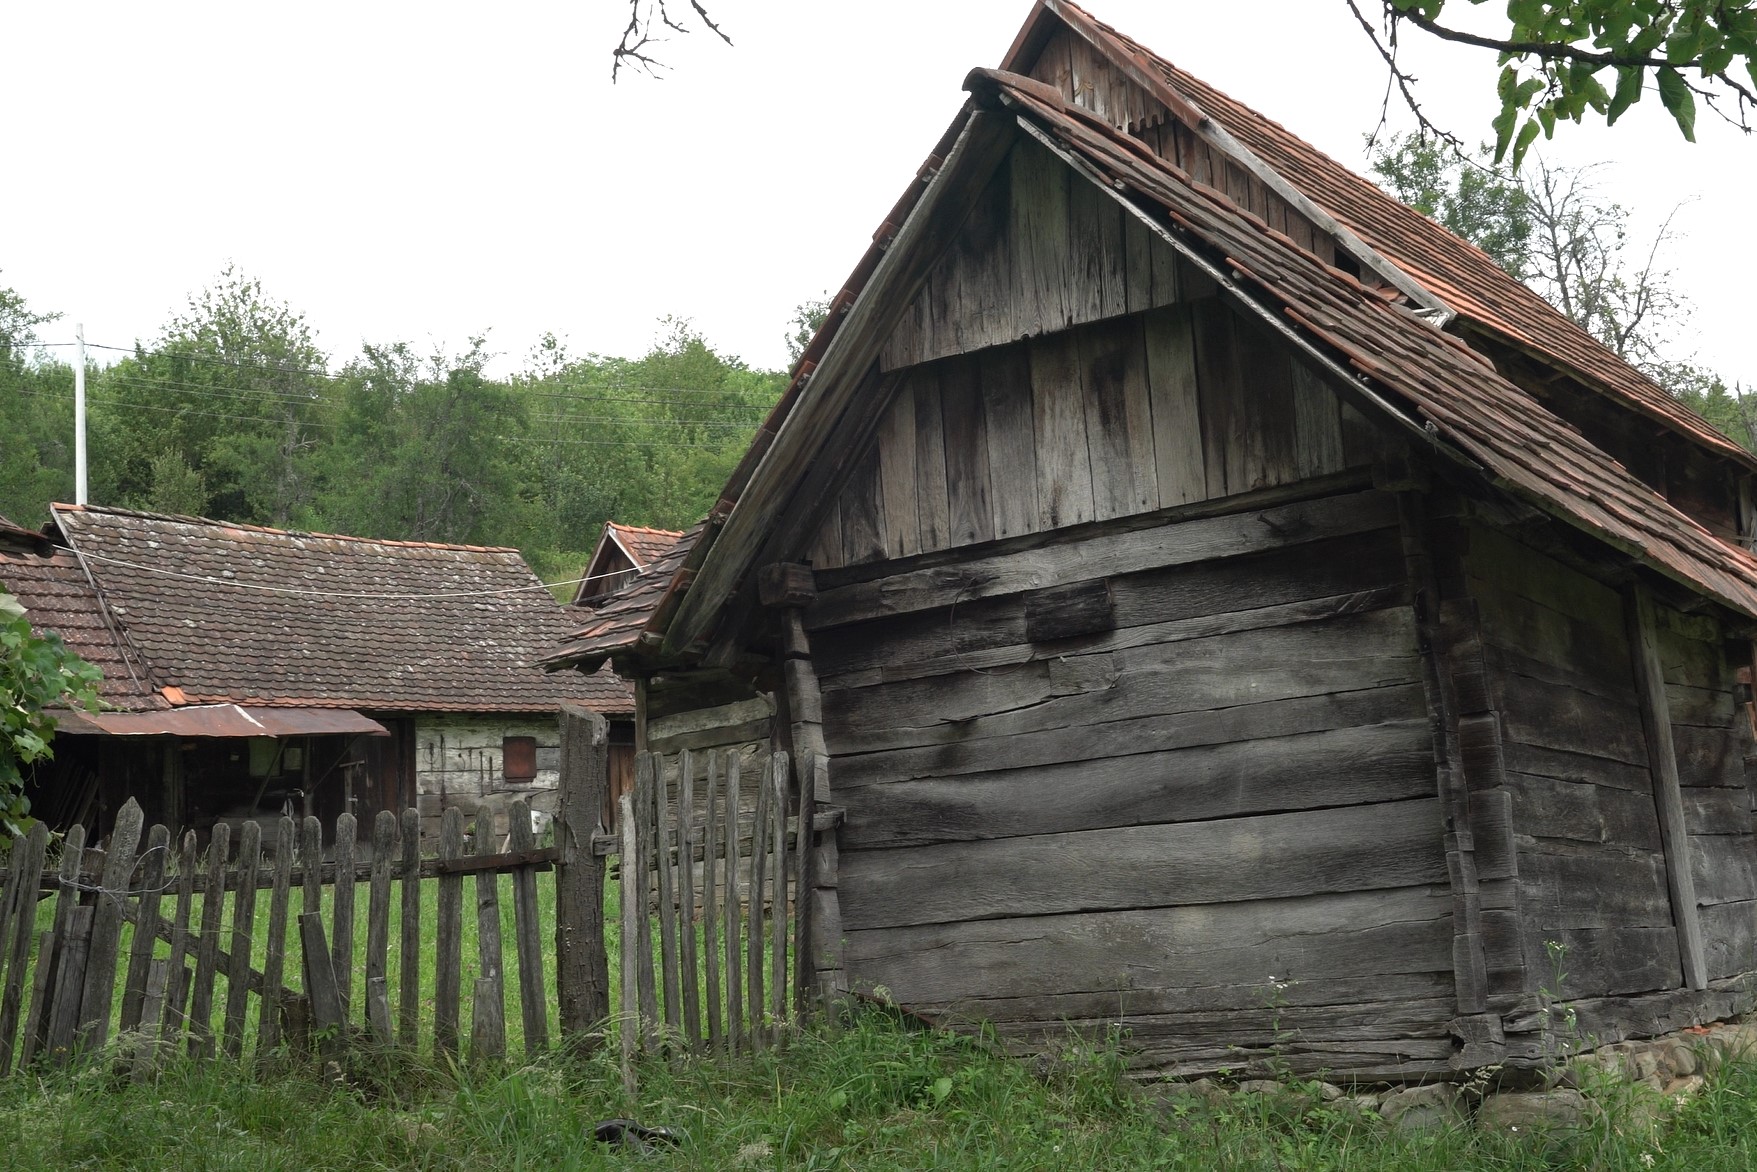 Wooden Architecture of Banovina & Banija, Croatia (c) Društvo Terra banalis, 2023